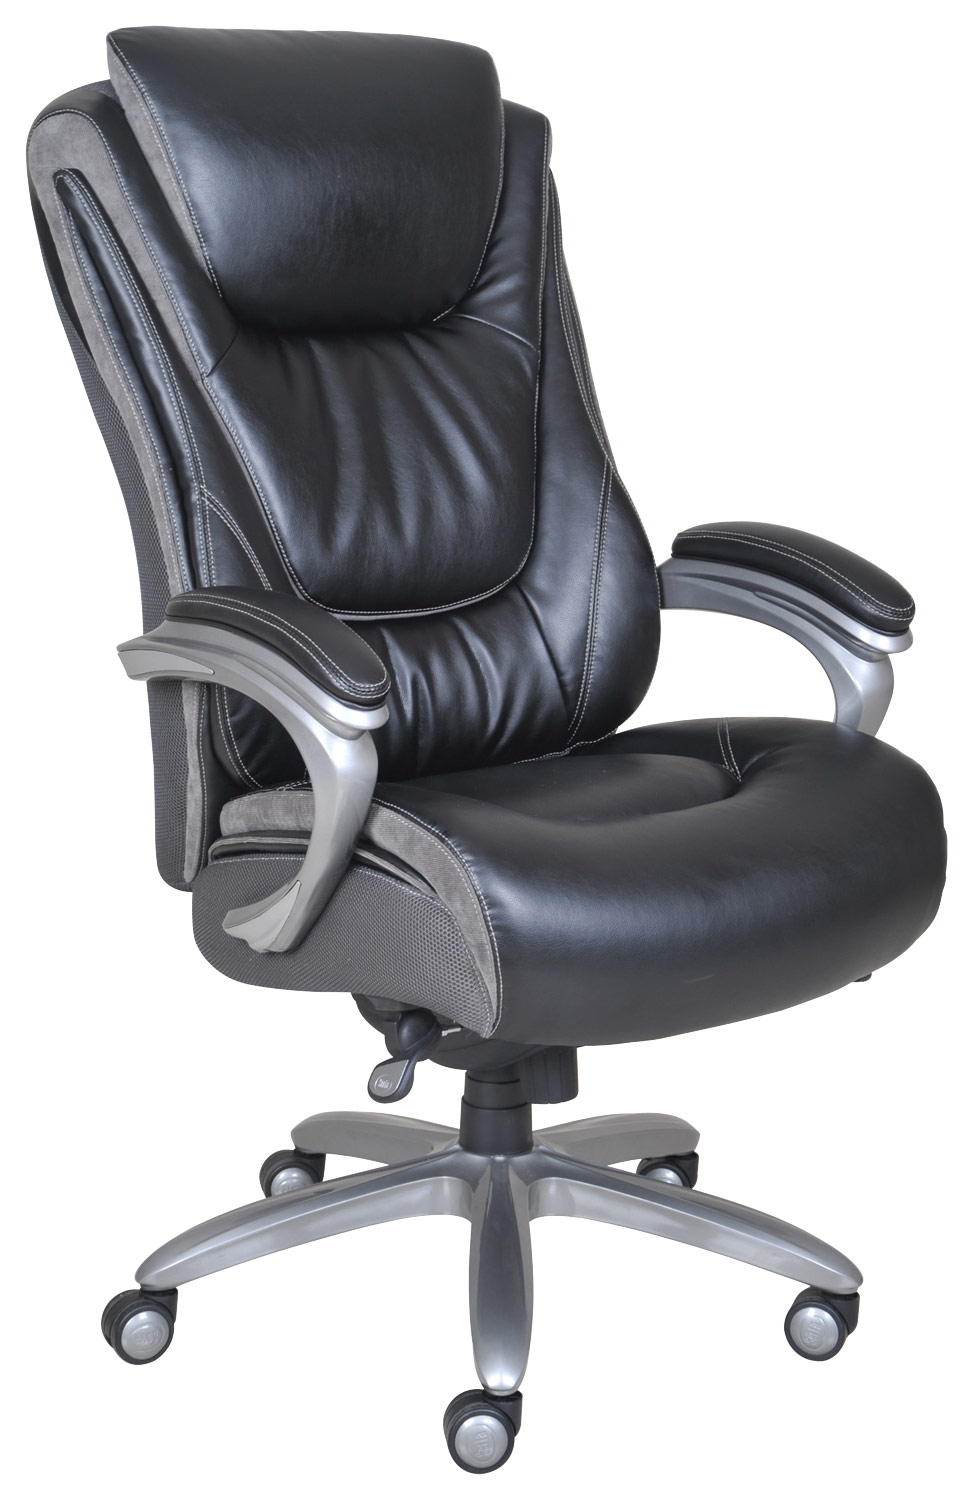 Serta Big Tall Smart Layers Leather, Serta Big And Tall Office Chair Manual